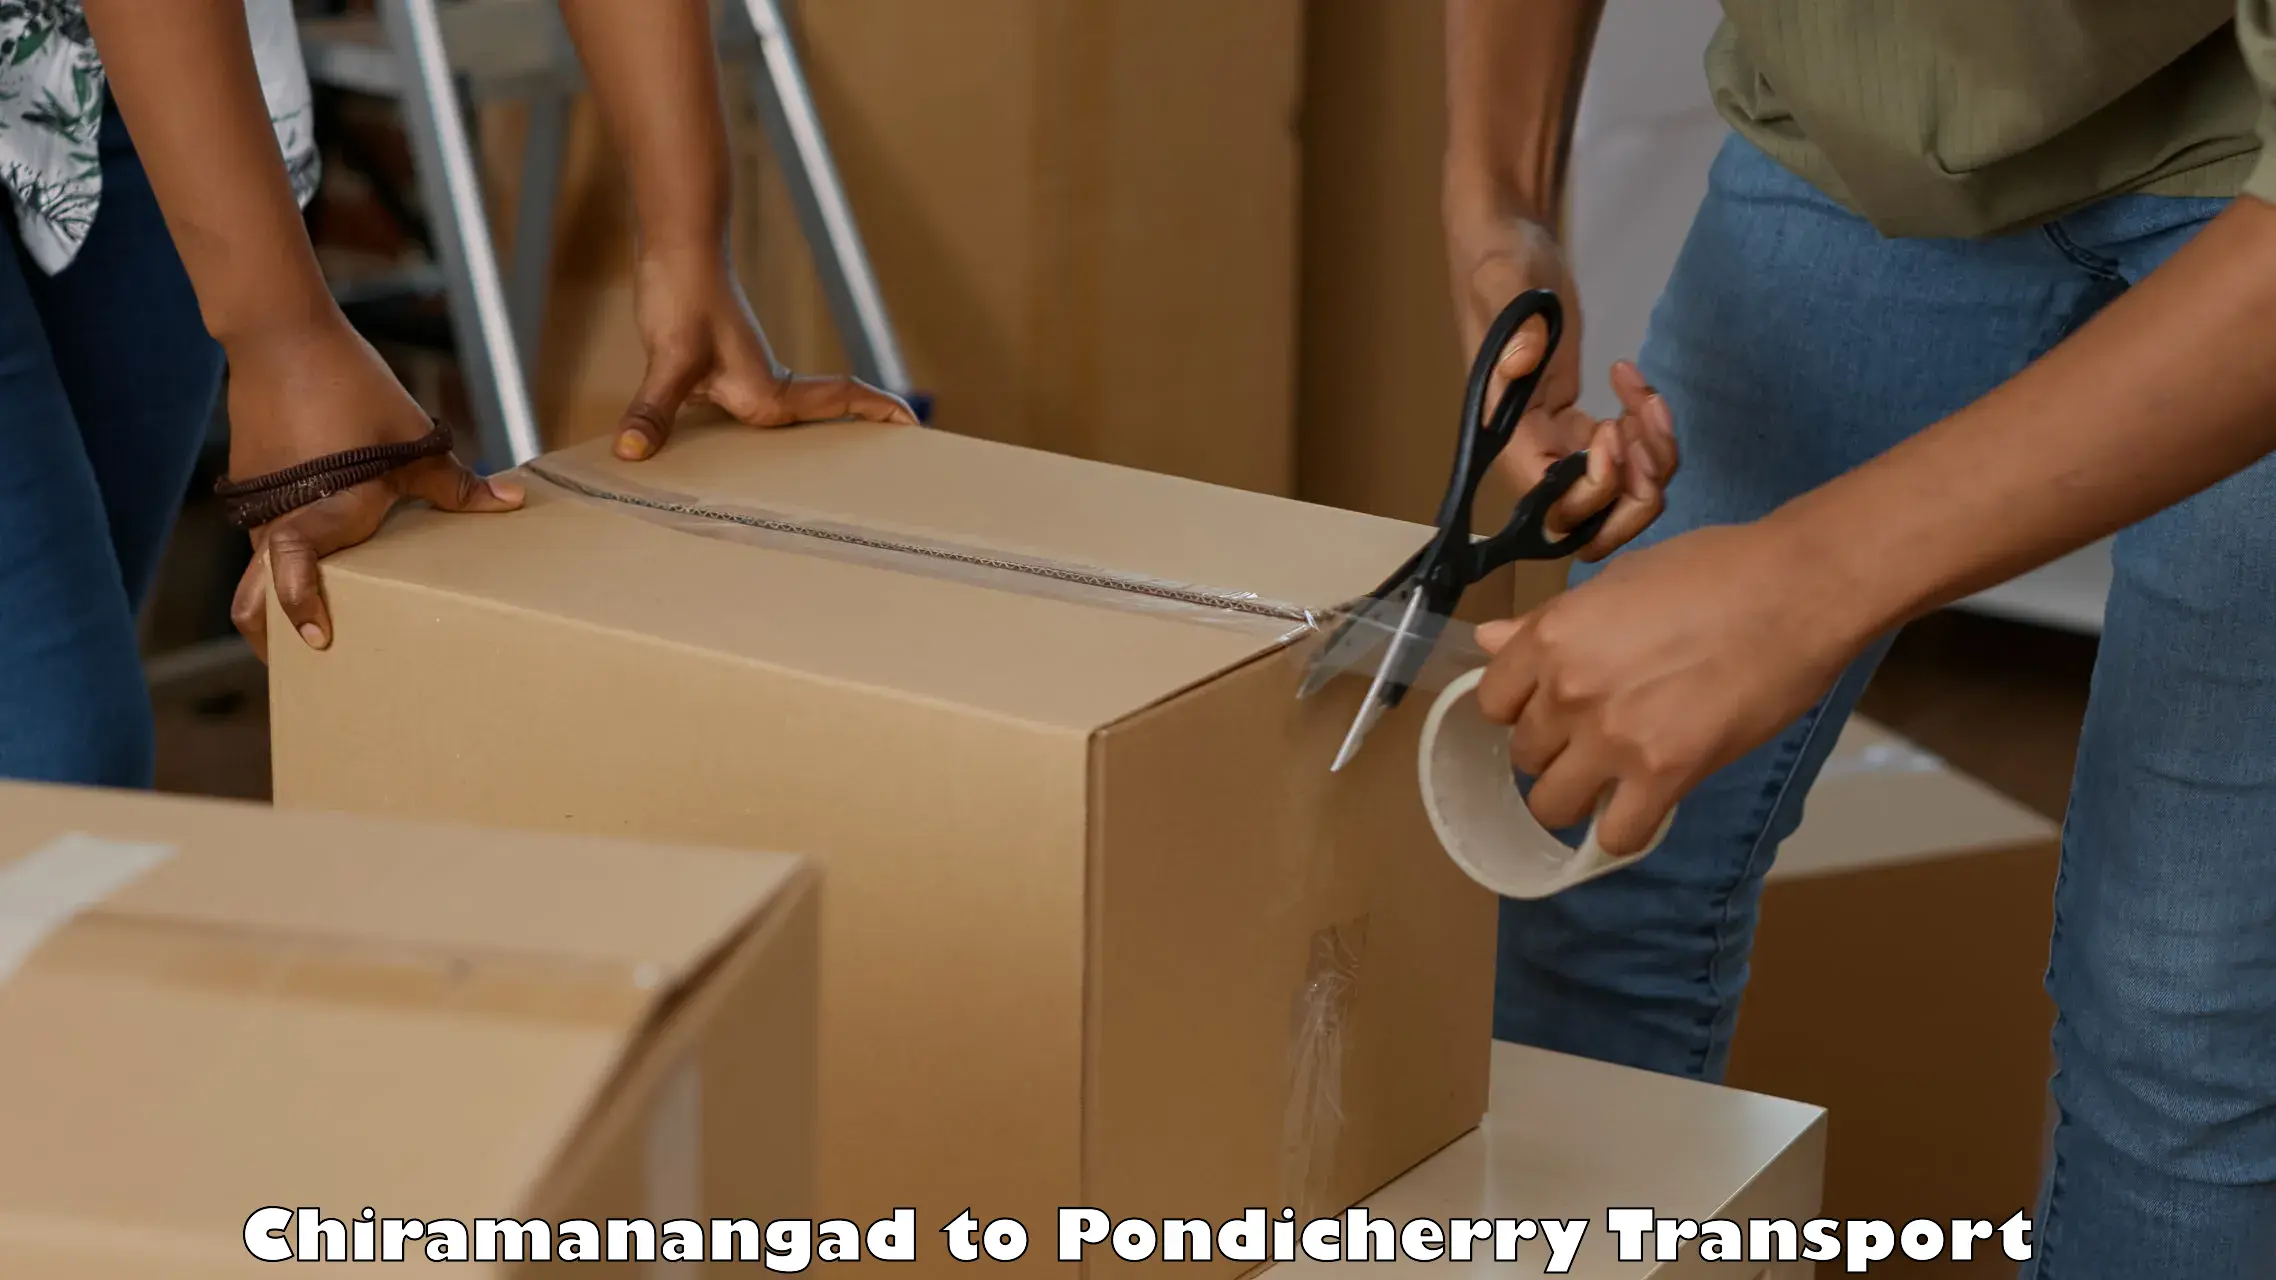 Container transport service Chiramanangad to Pondicherry University